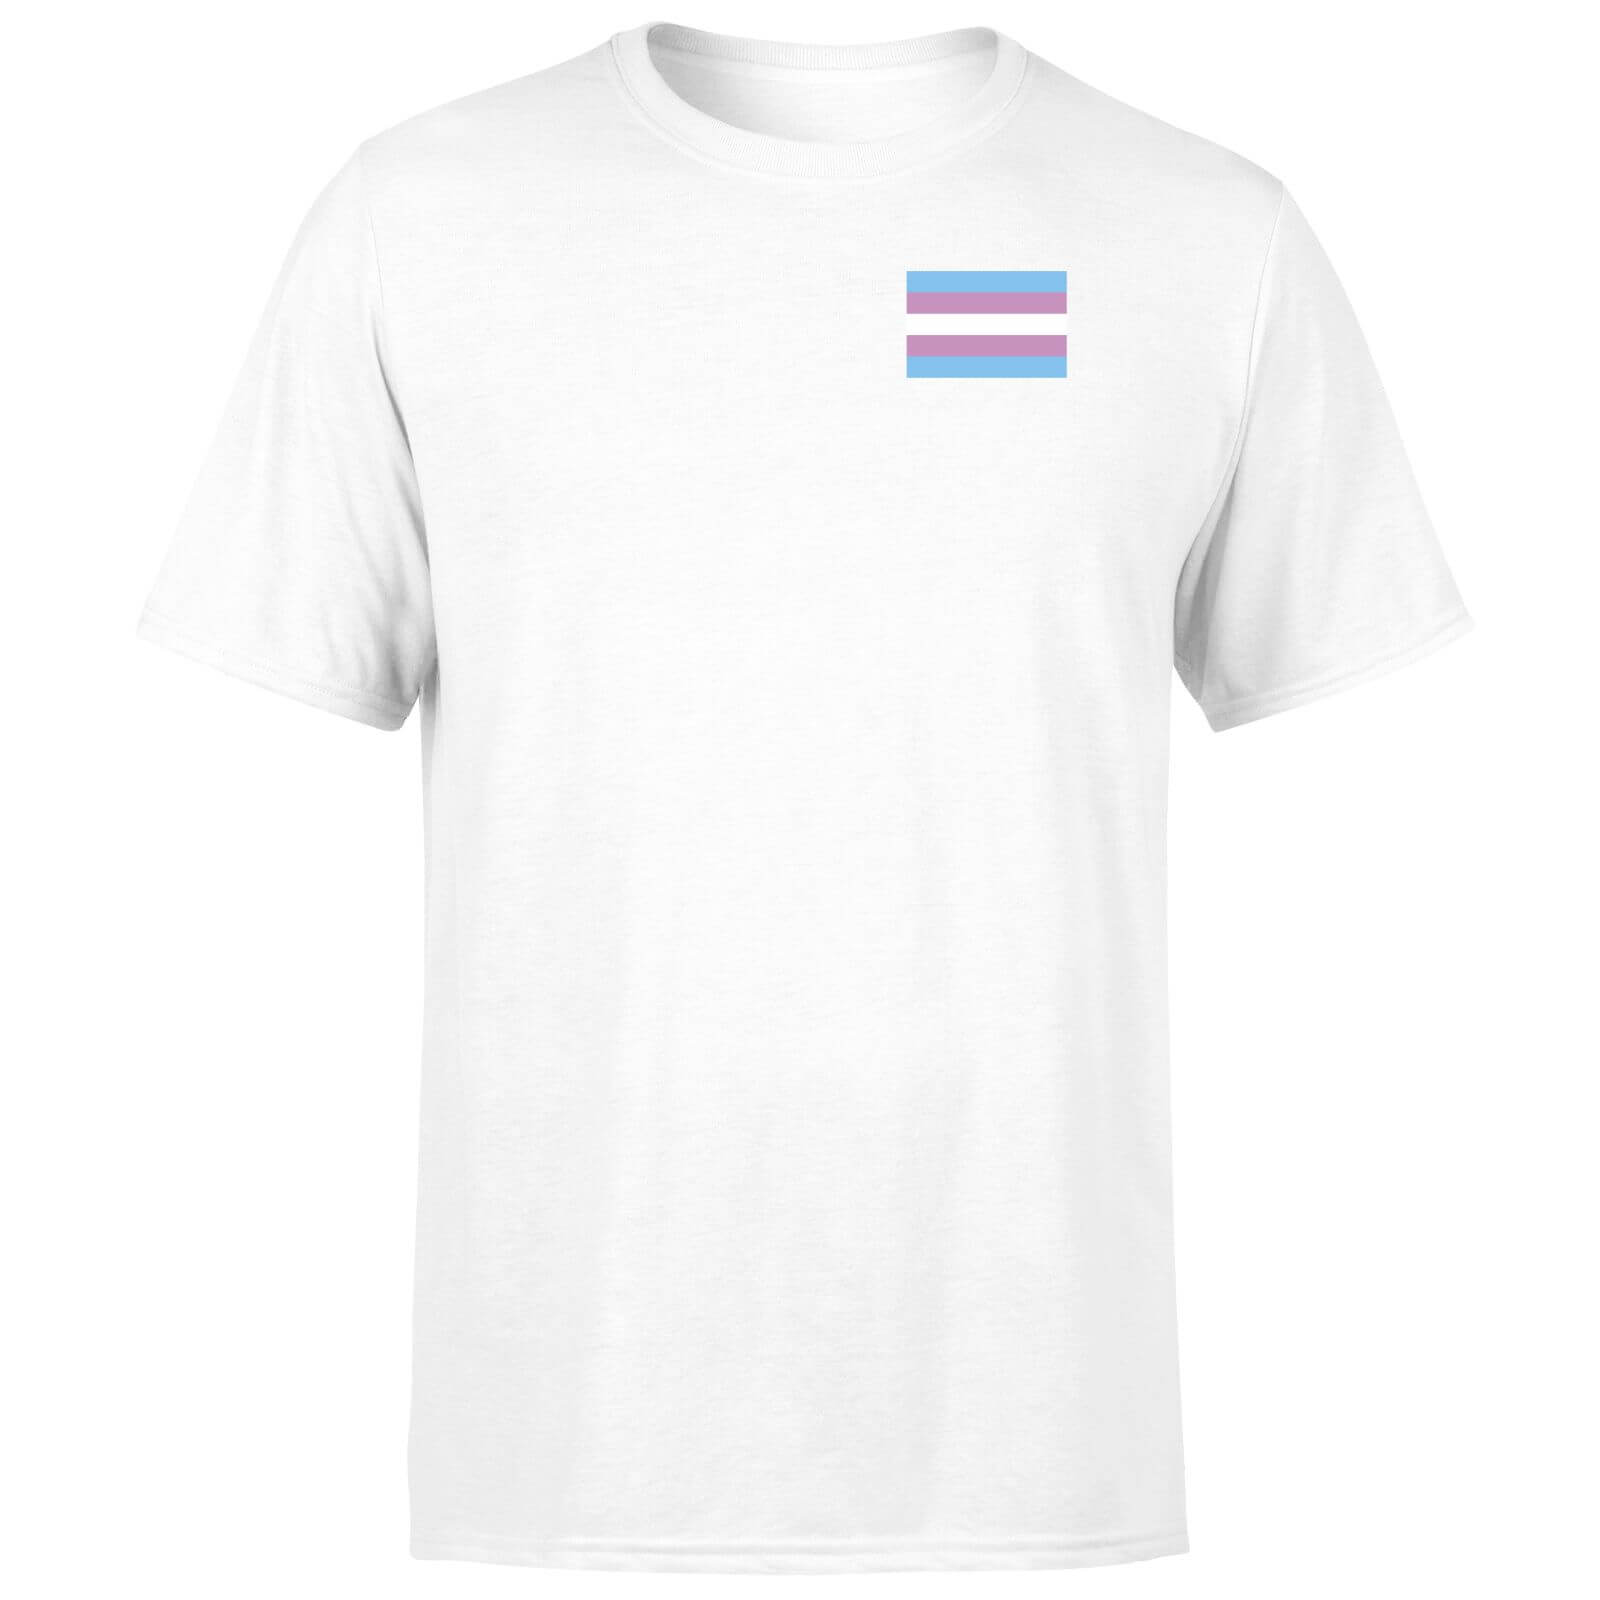 Transgender Flag T-Shirt - White - XS - White